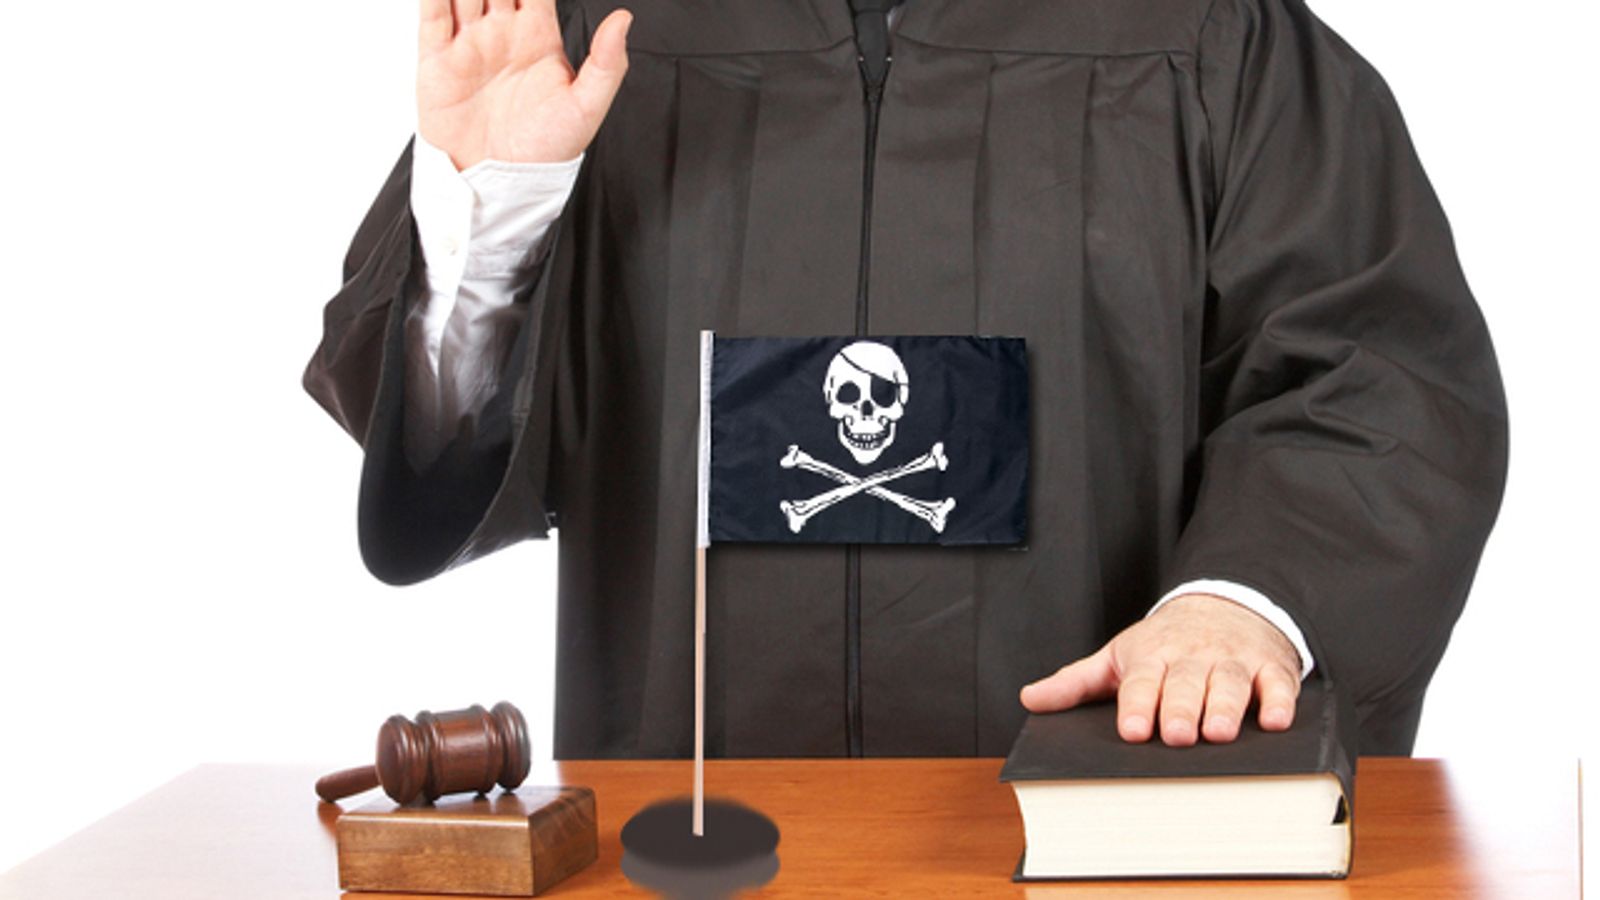 Pirate Bay Trial Judge Accused of Bias